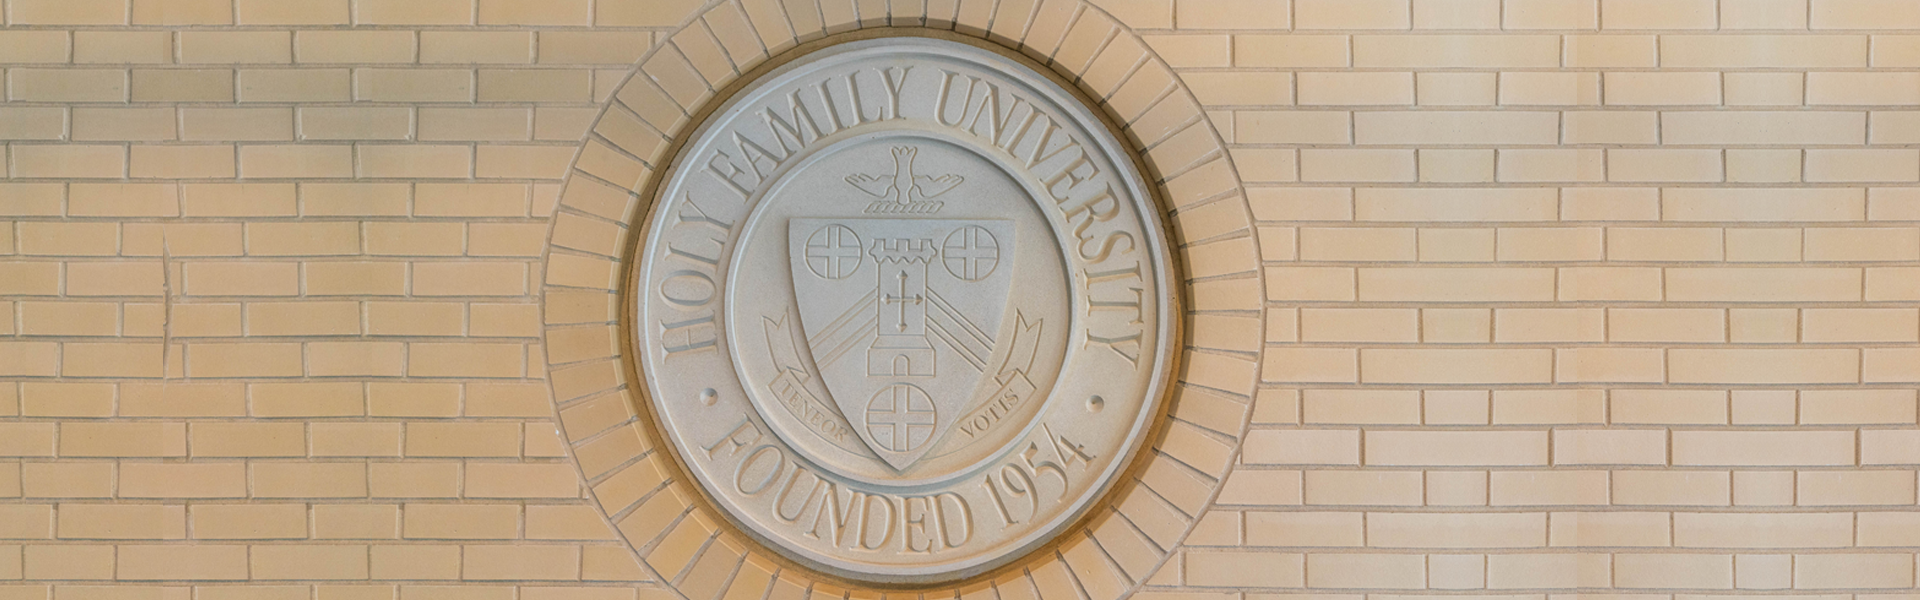 Holy Family University Seal 